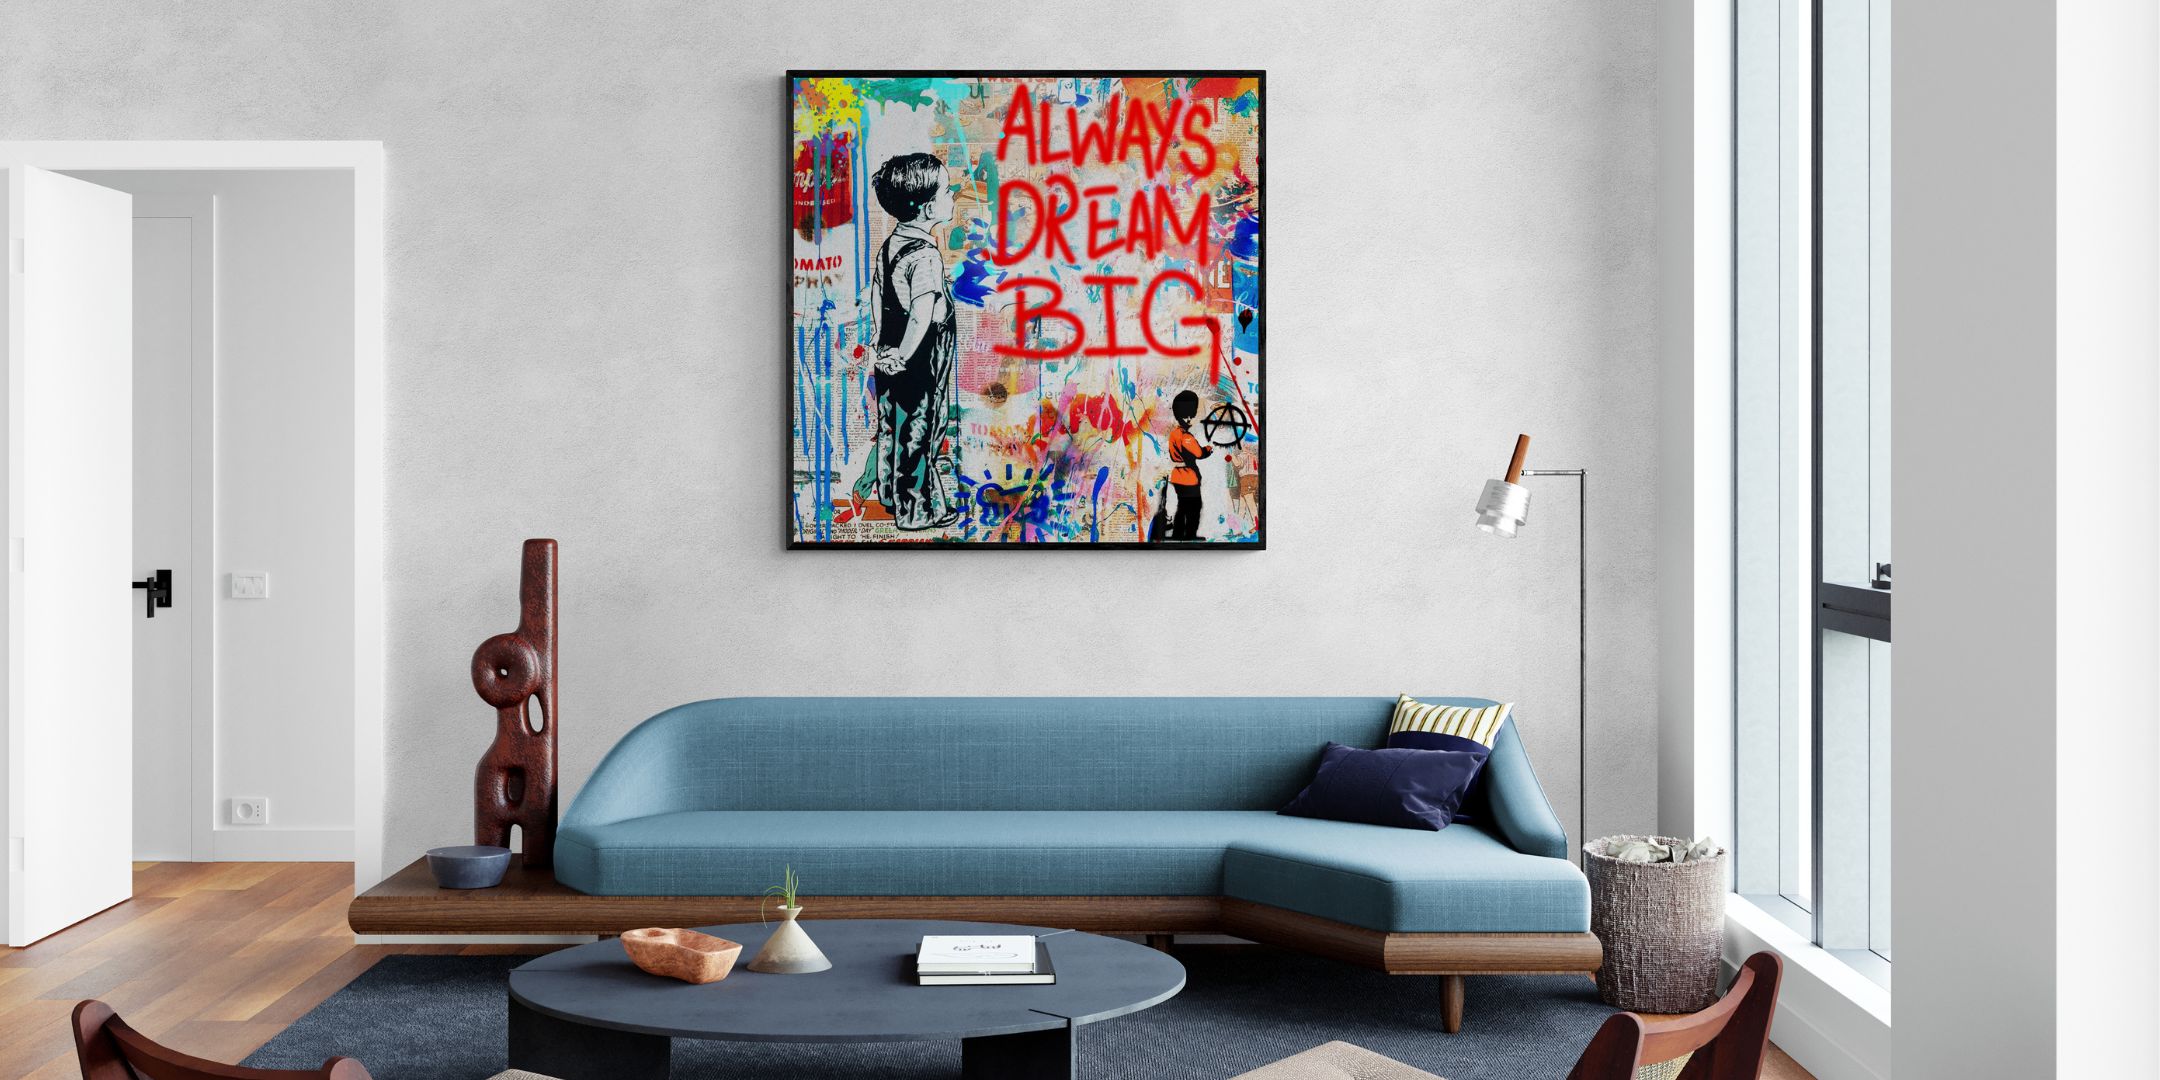 Bestseller Design "Always Dream Big" by Art For Everyone